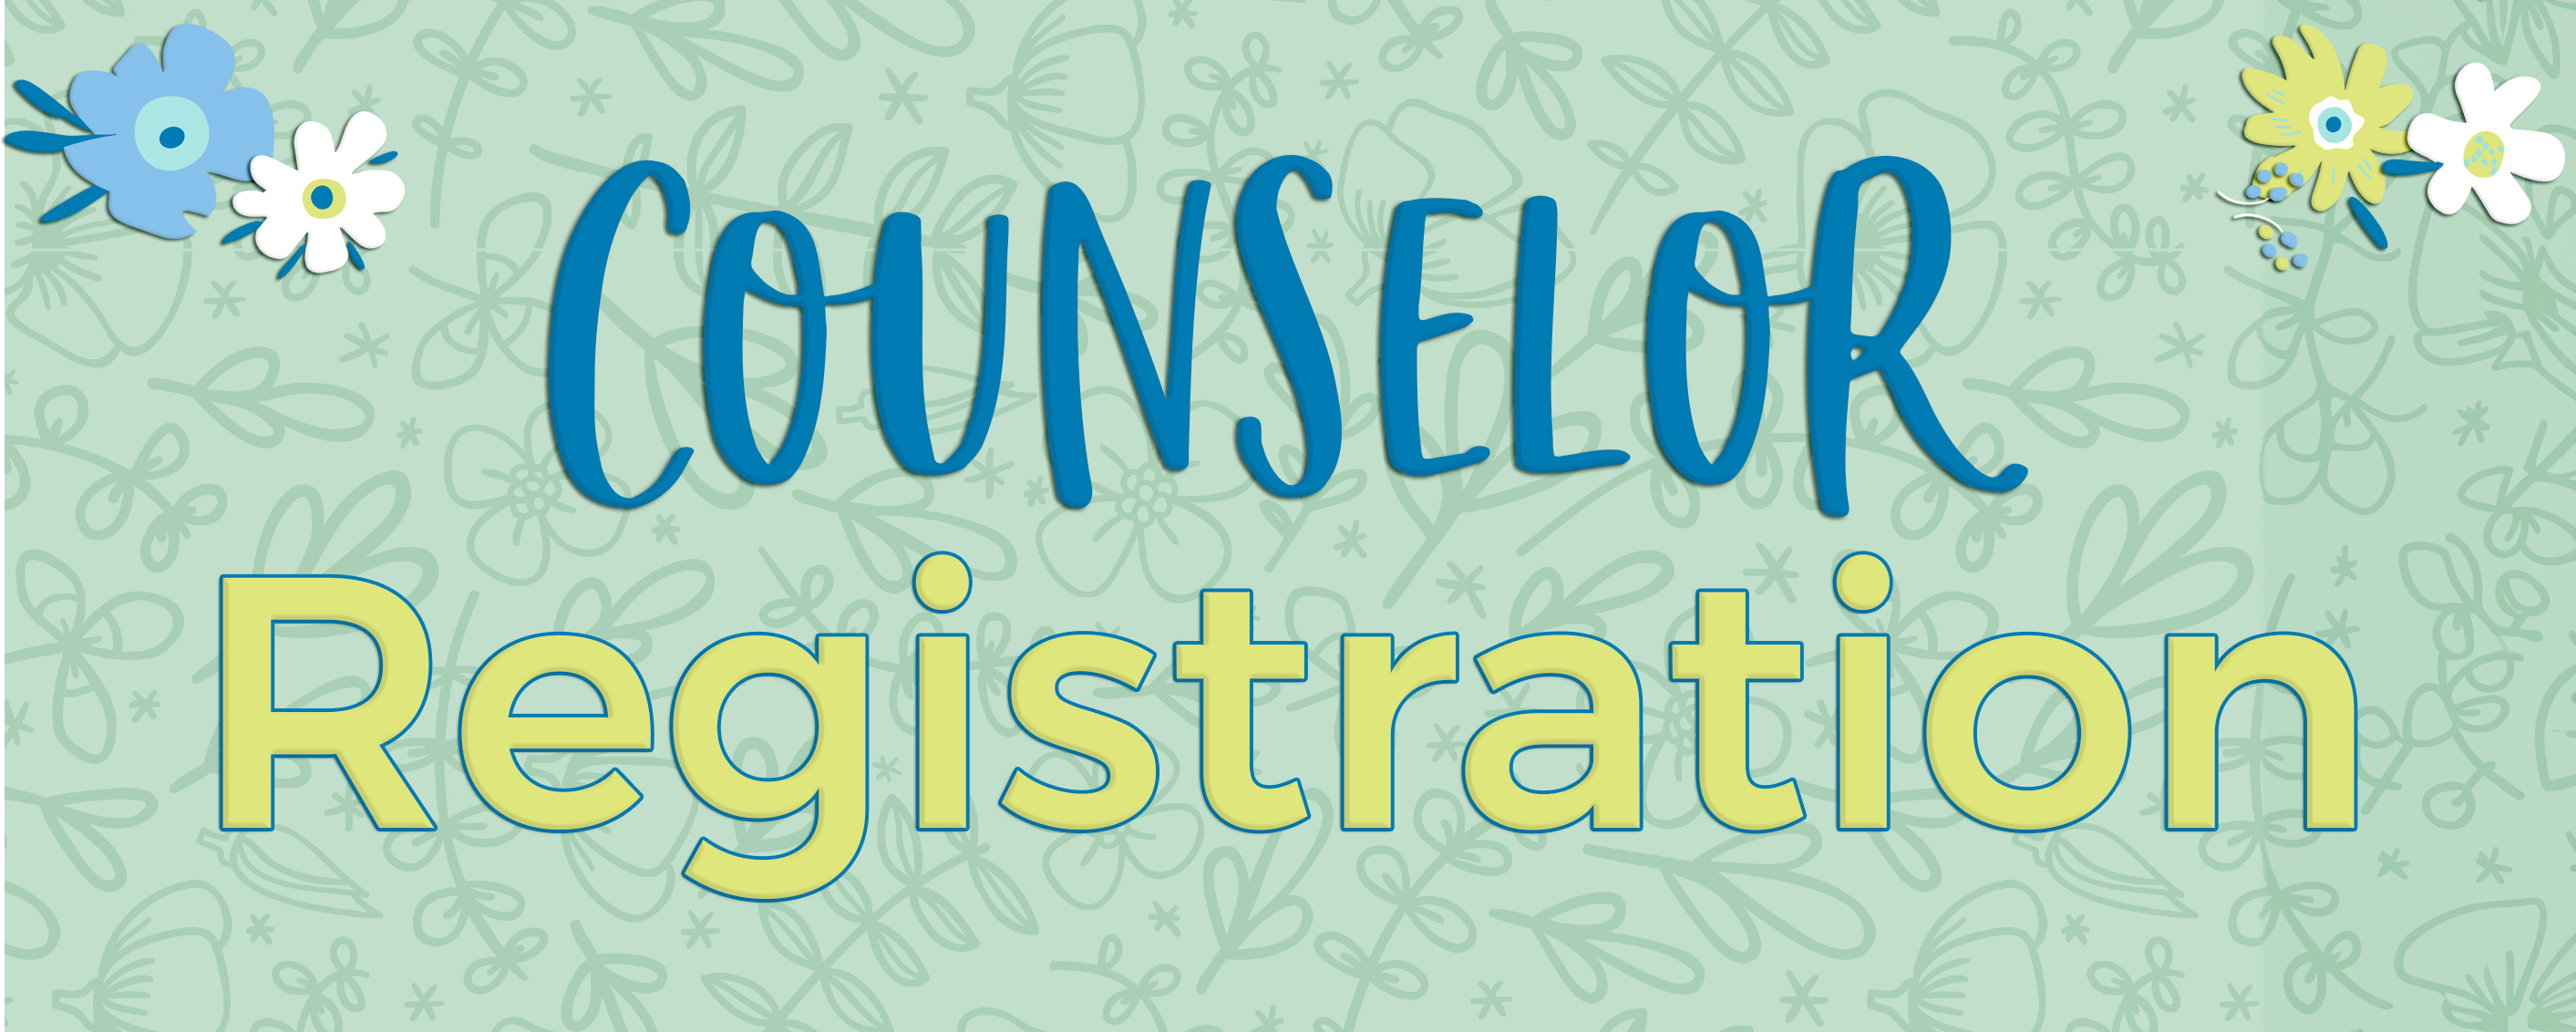 counselor registration